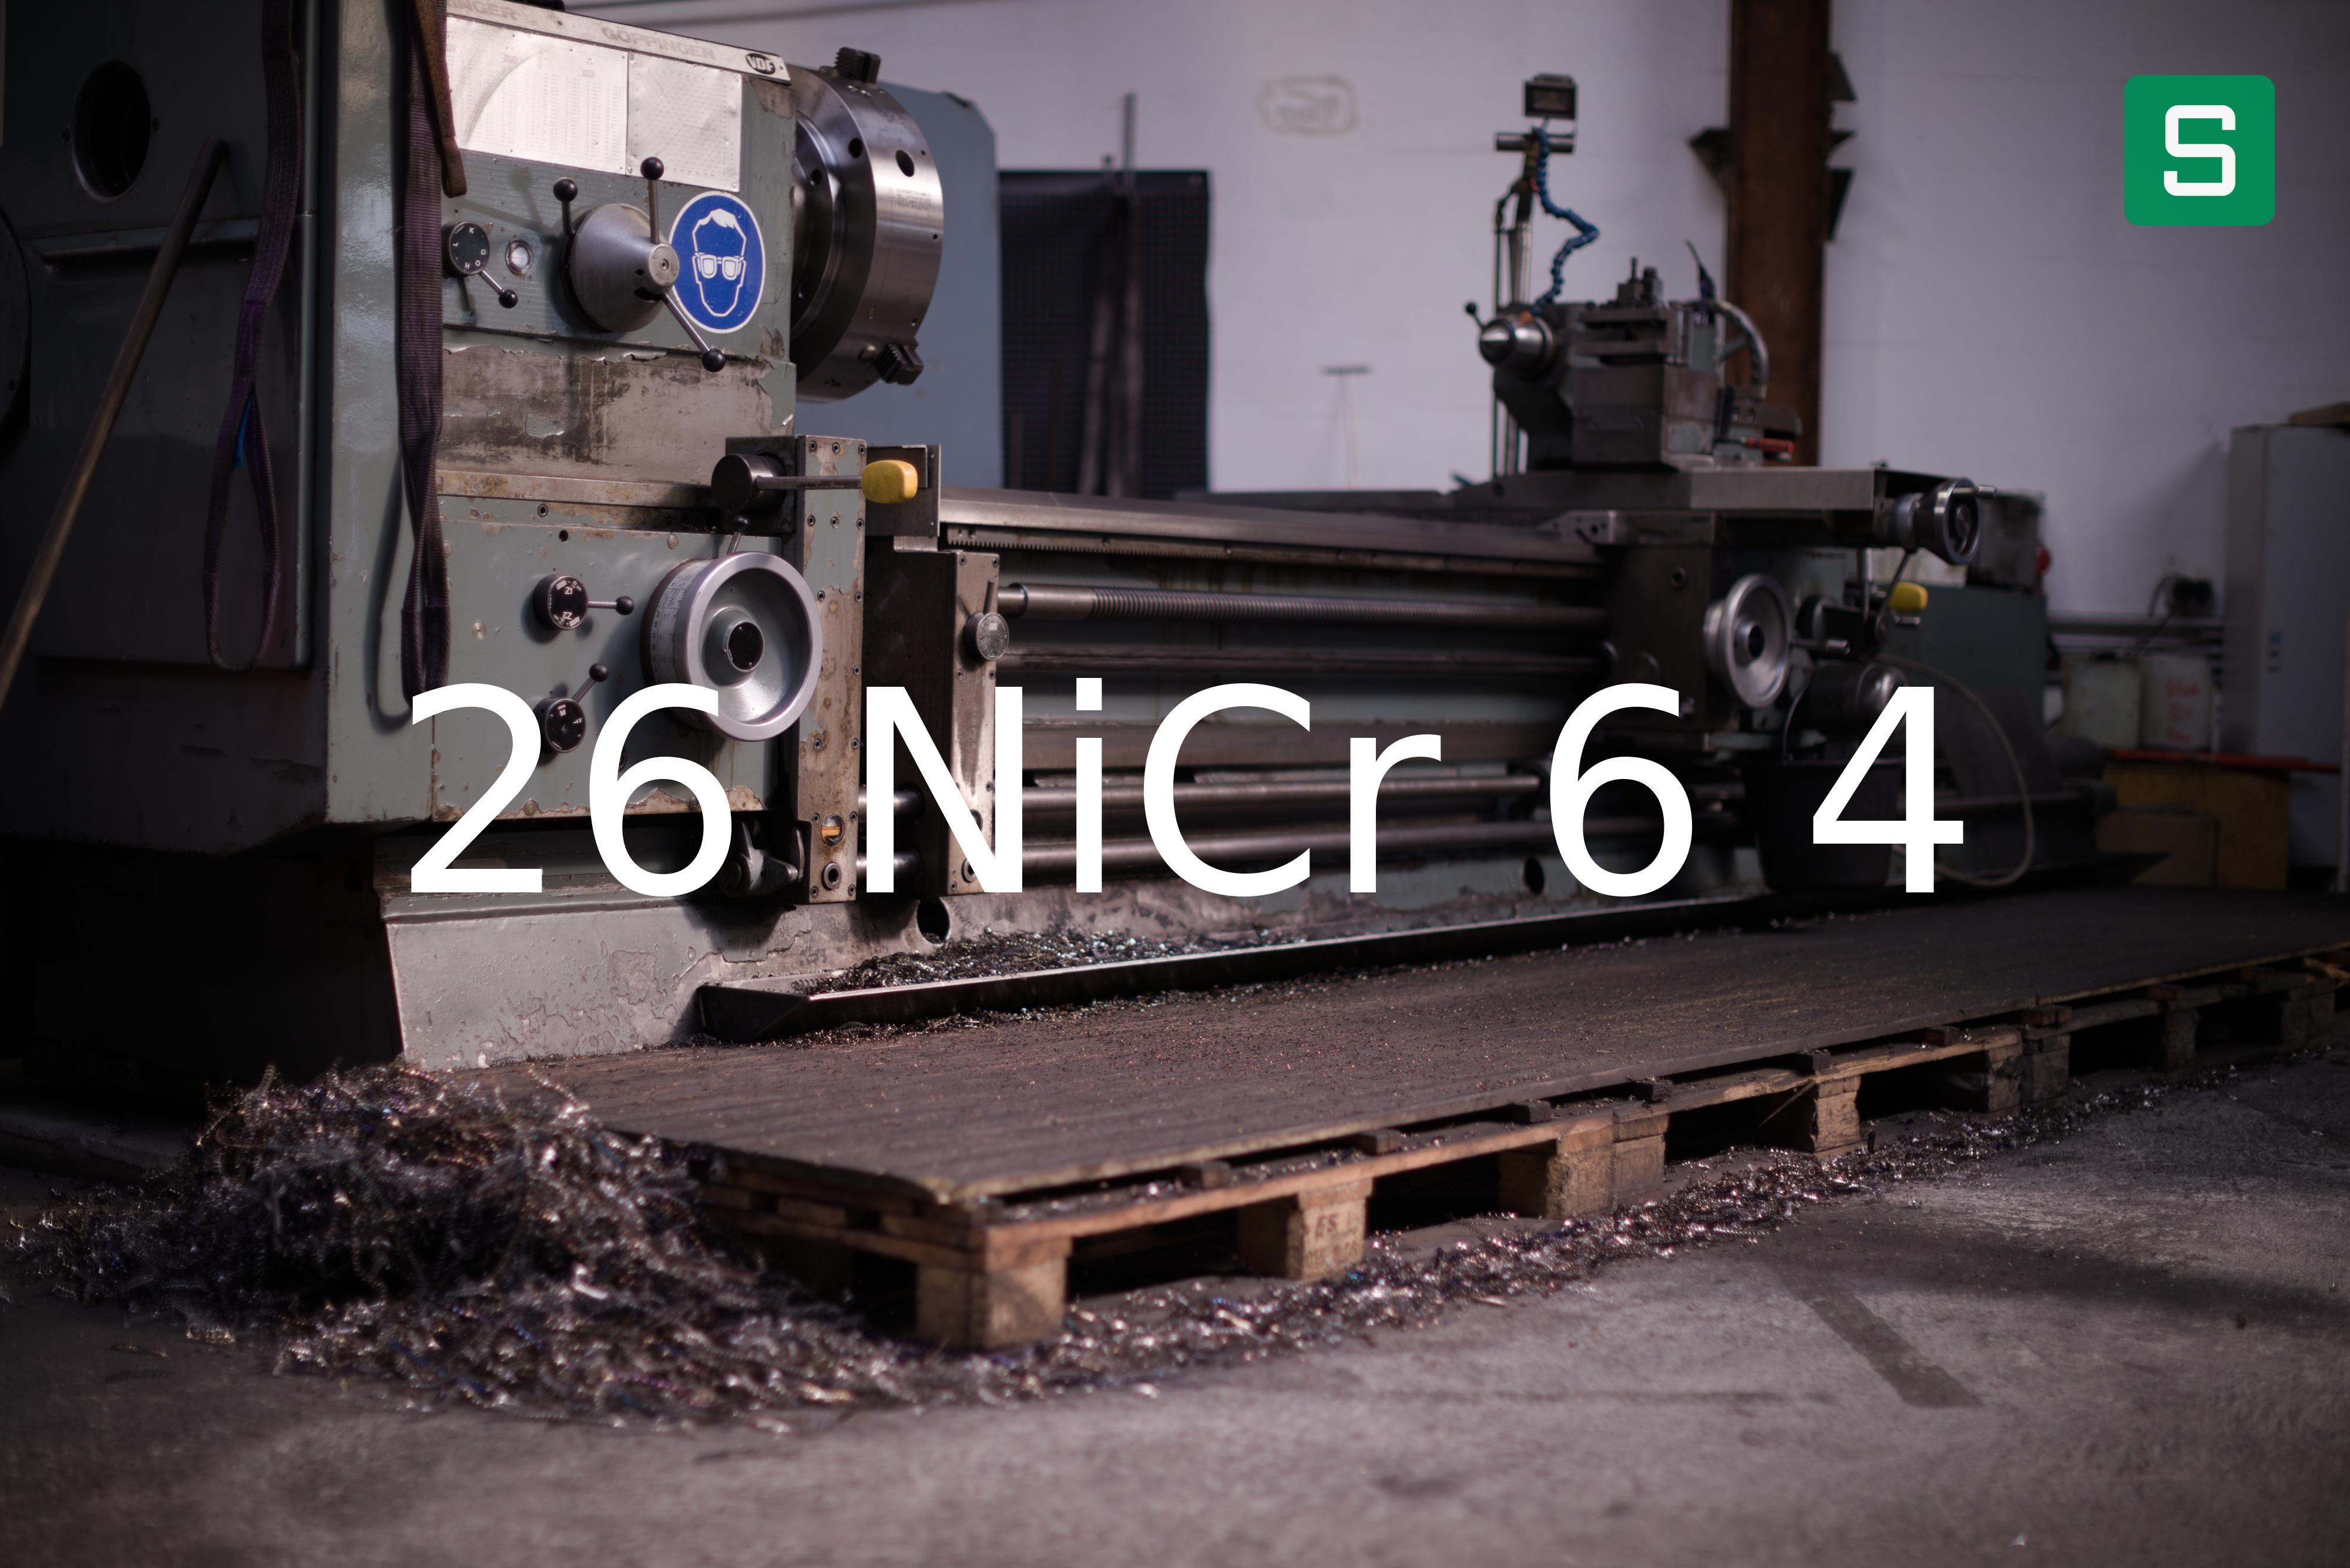 Steel Material: 26 NiCr 6 4